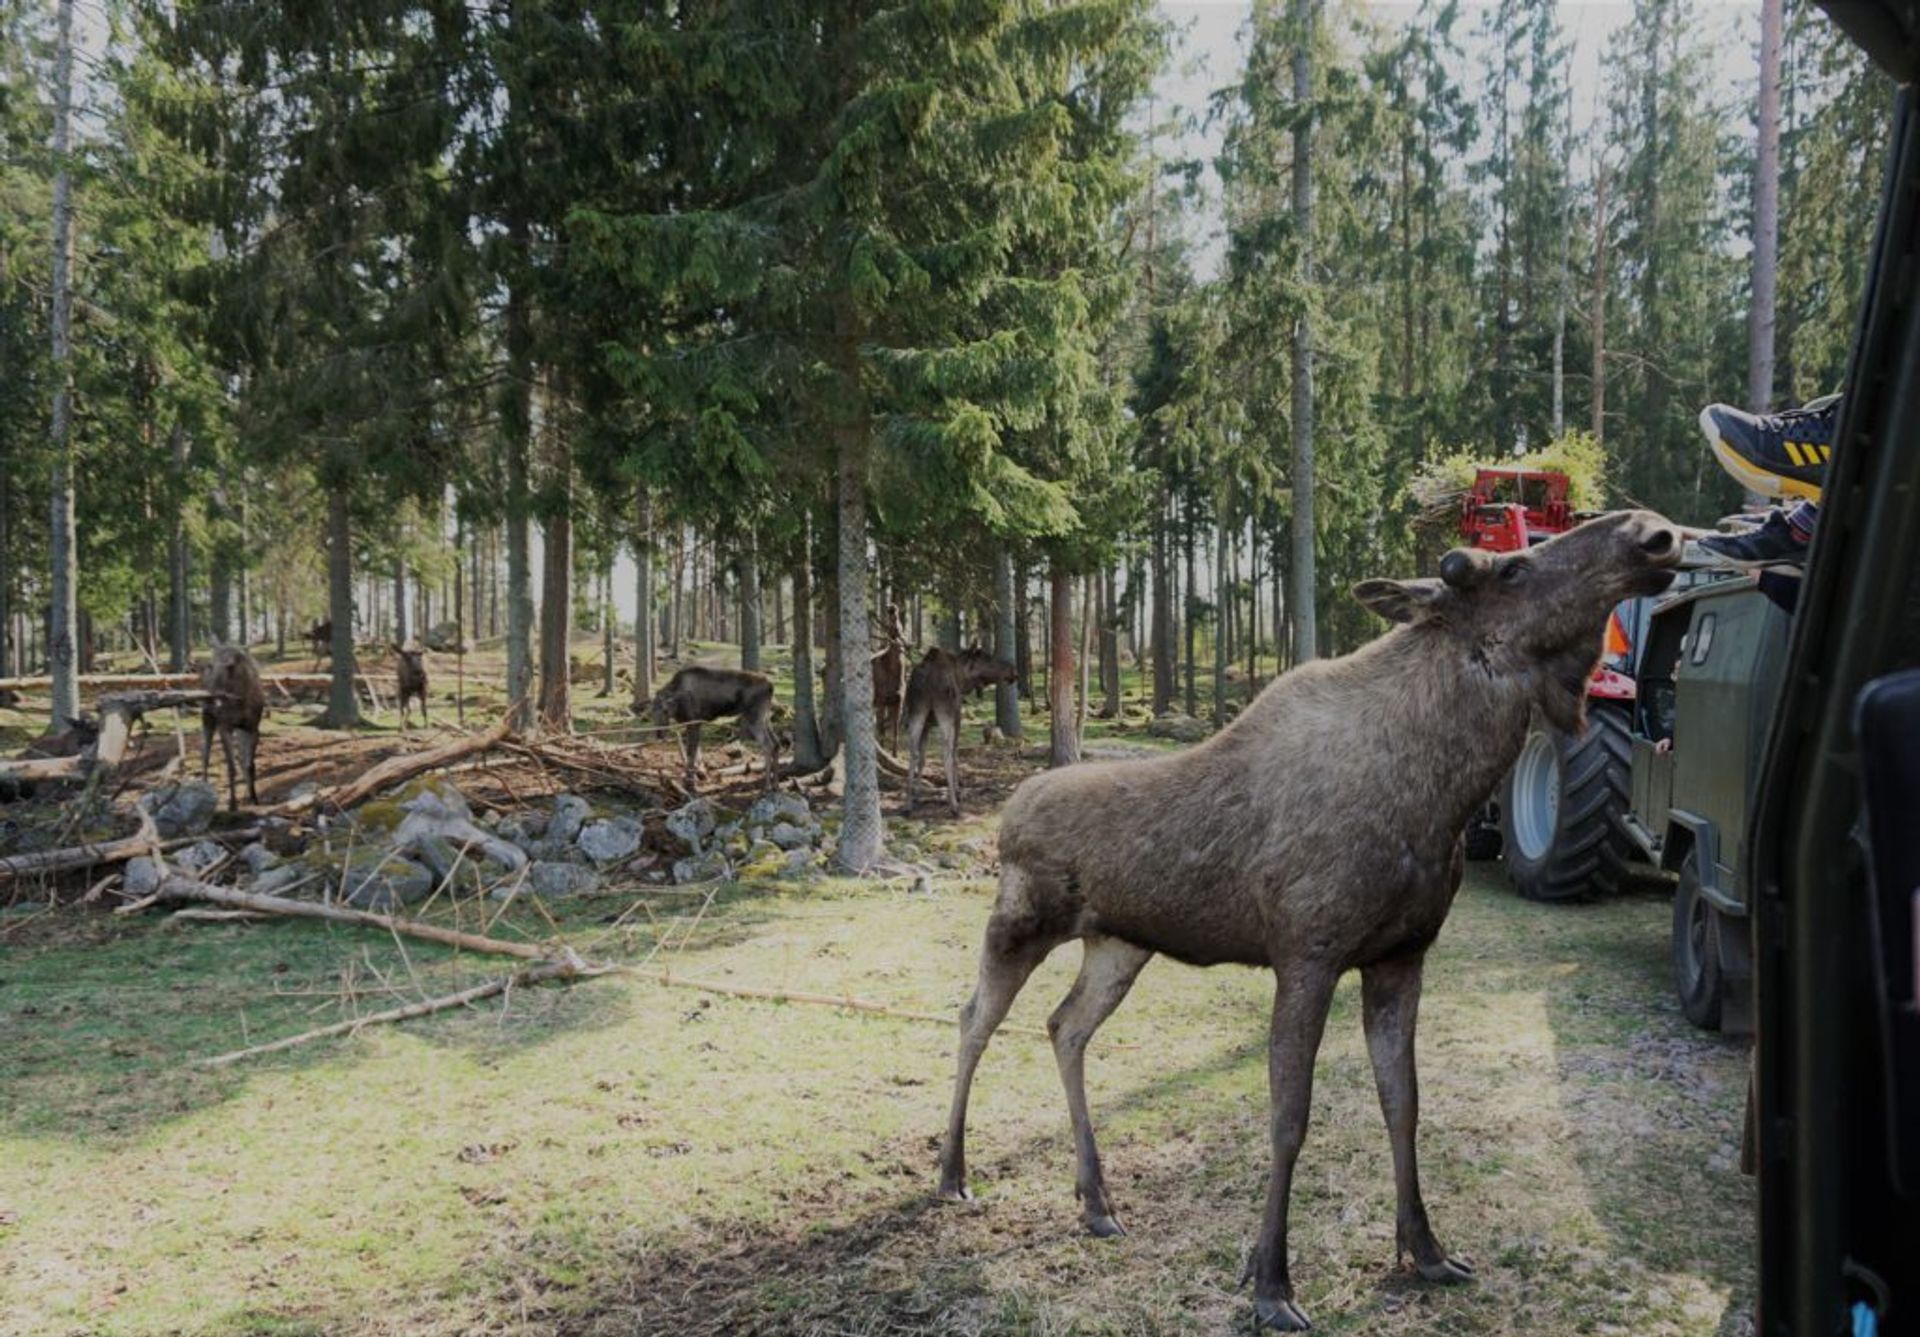 People feeding a moose.